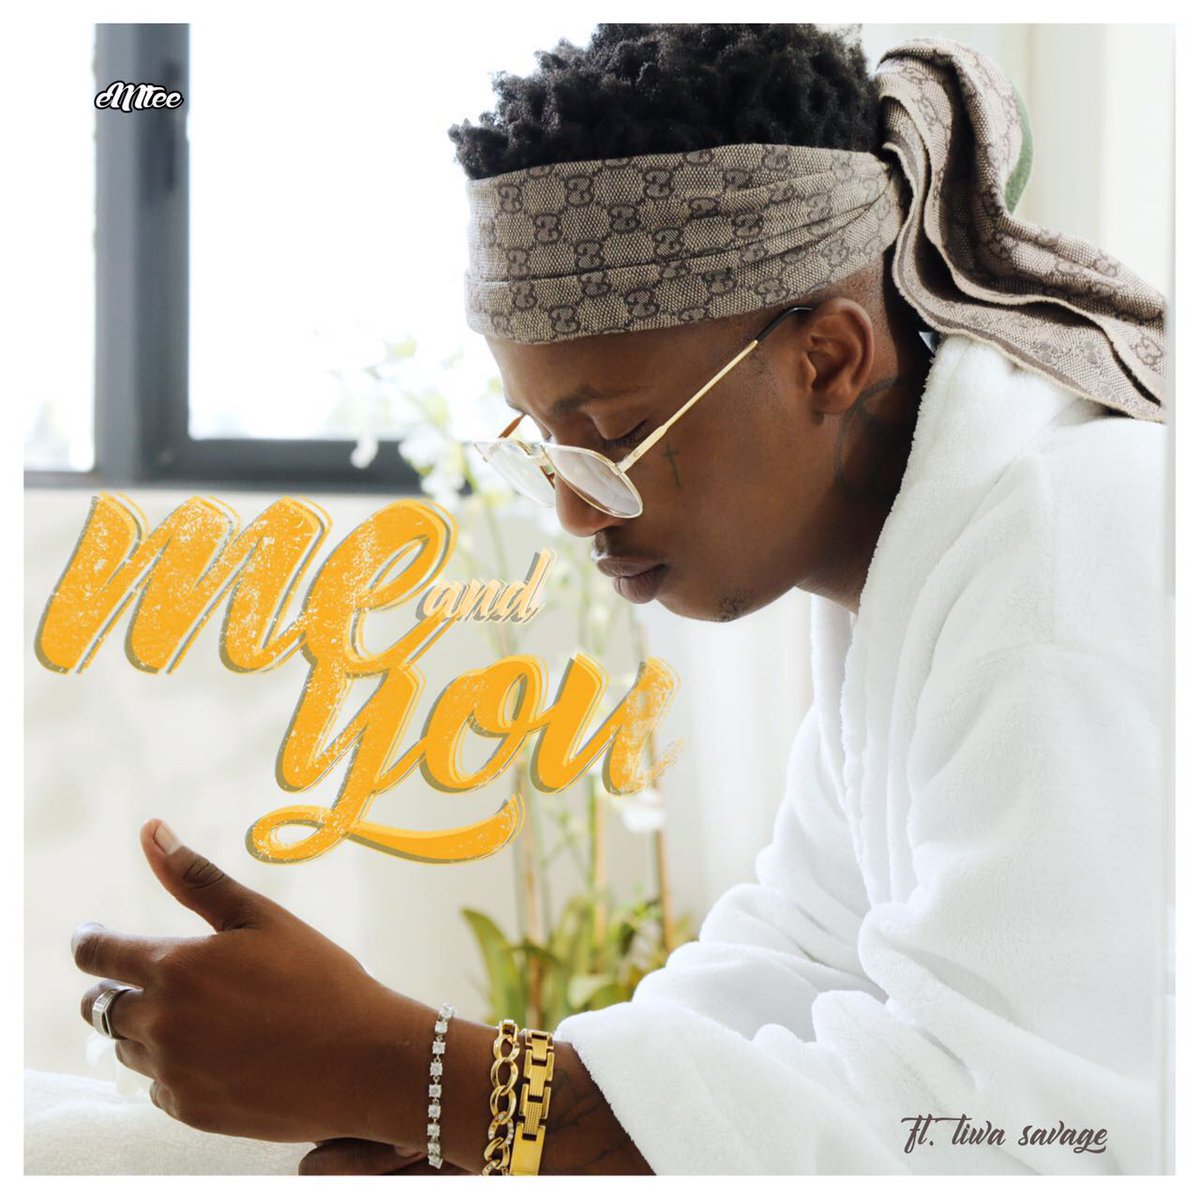 Download Emtee's '#MeAndYou' Featuring Tiwa Savage